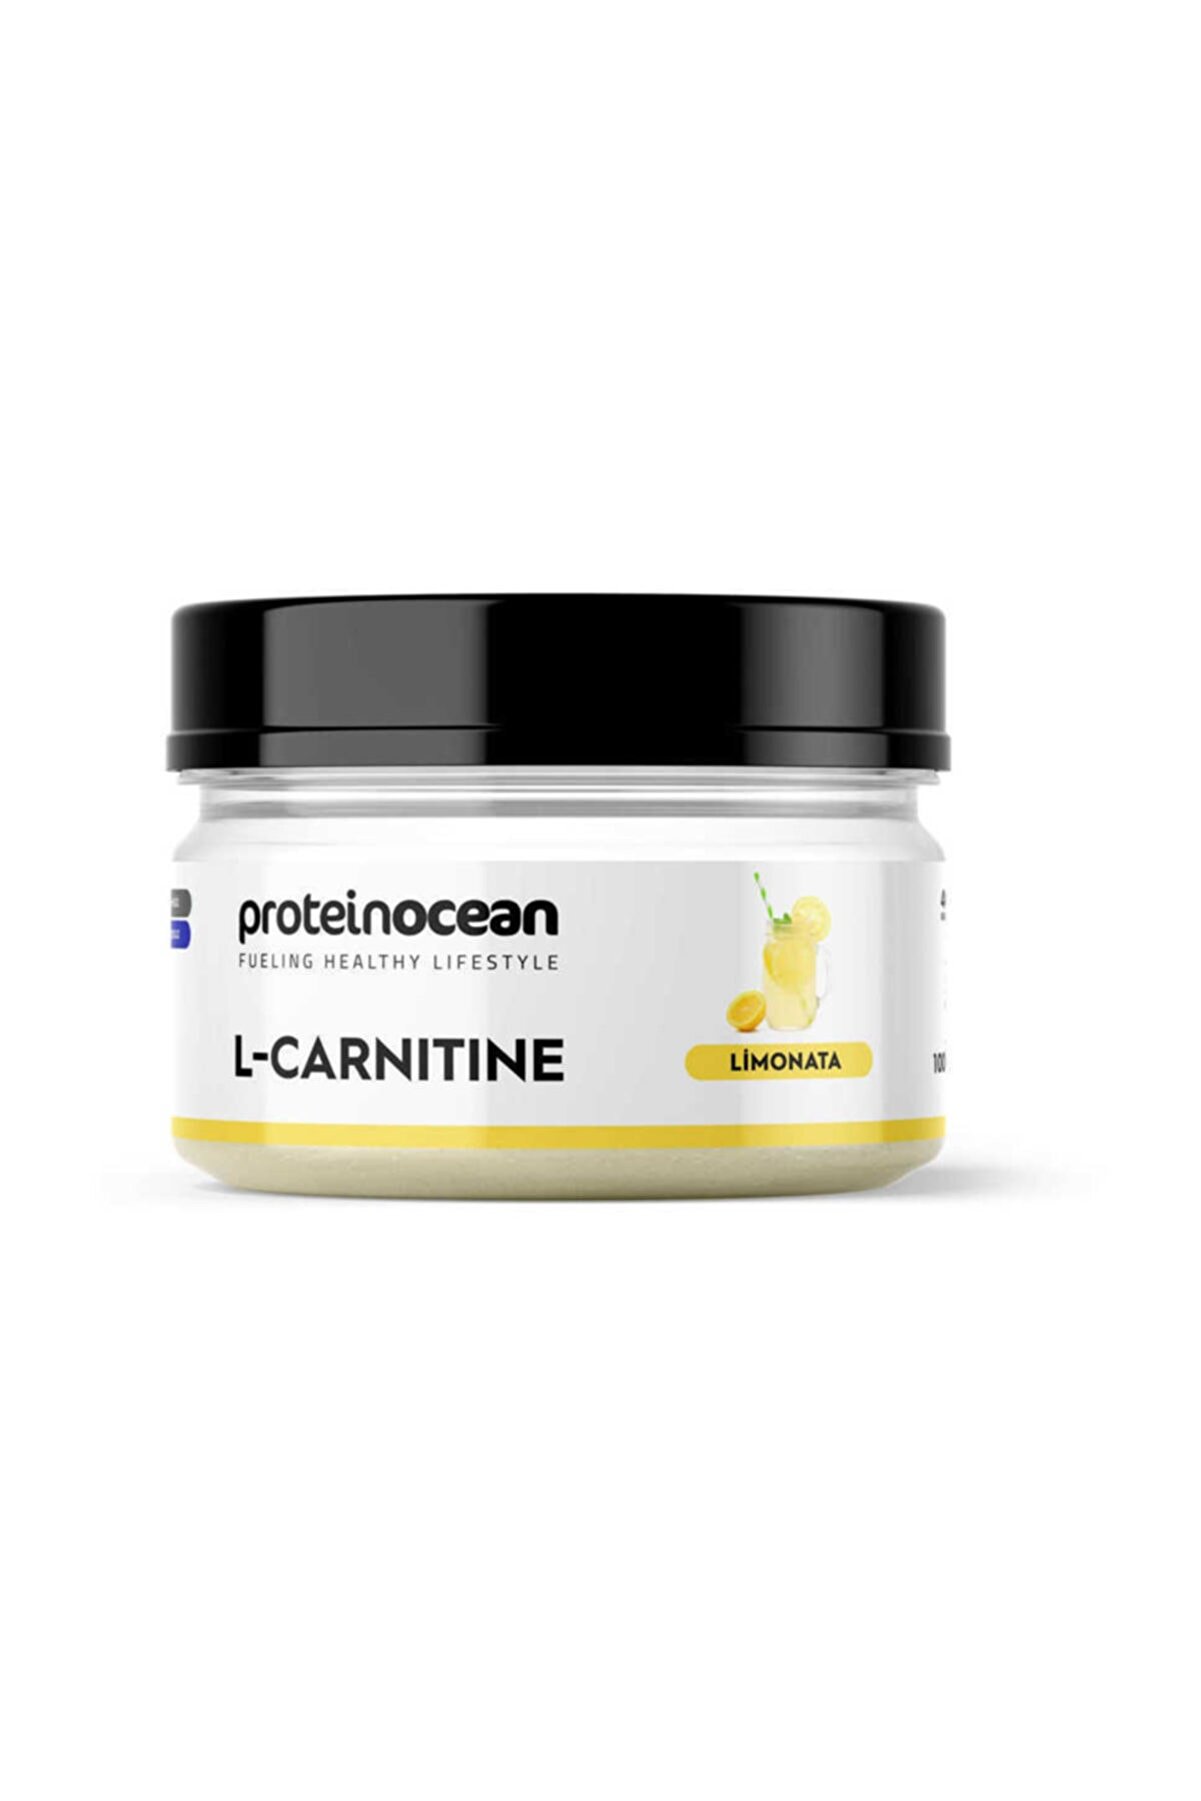 Proteinocean L-carnitine Limonata 100 g X 4 Adet - 160 Servis